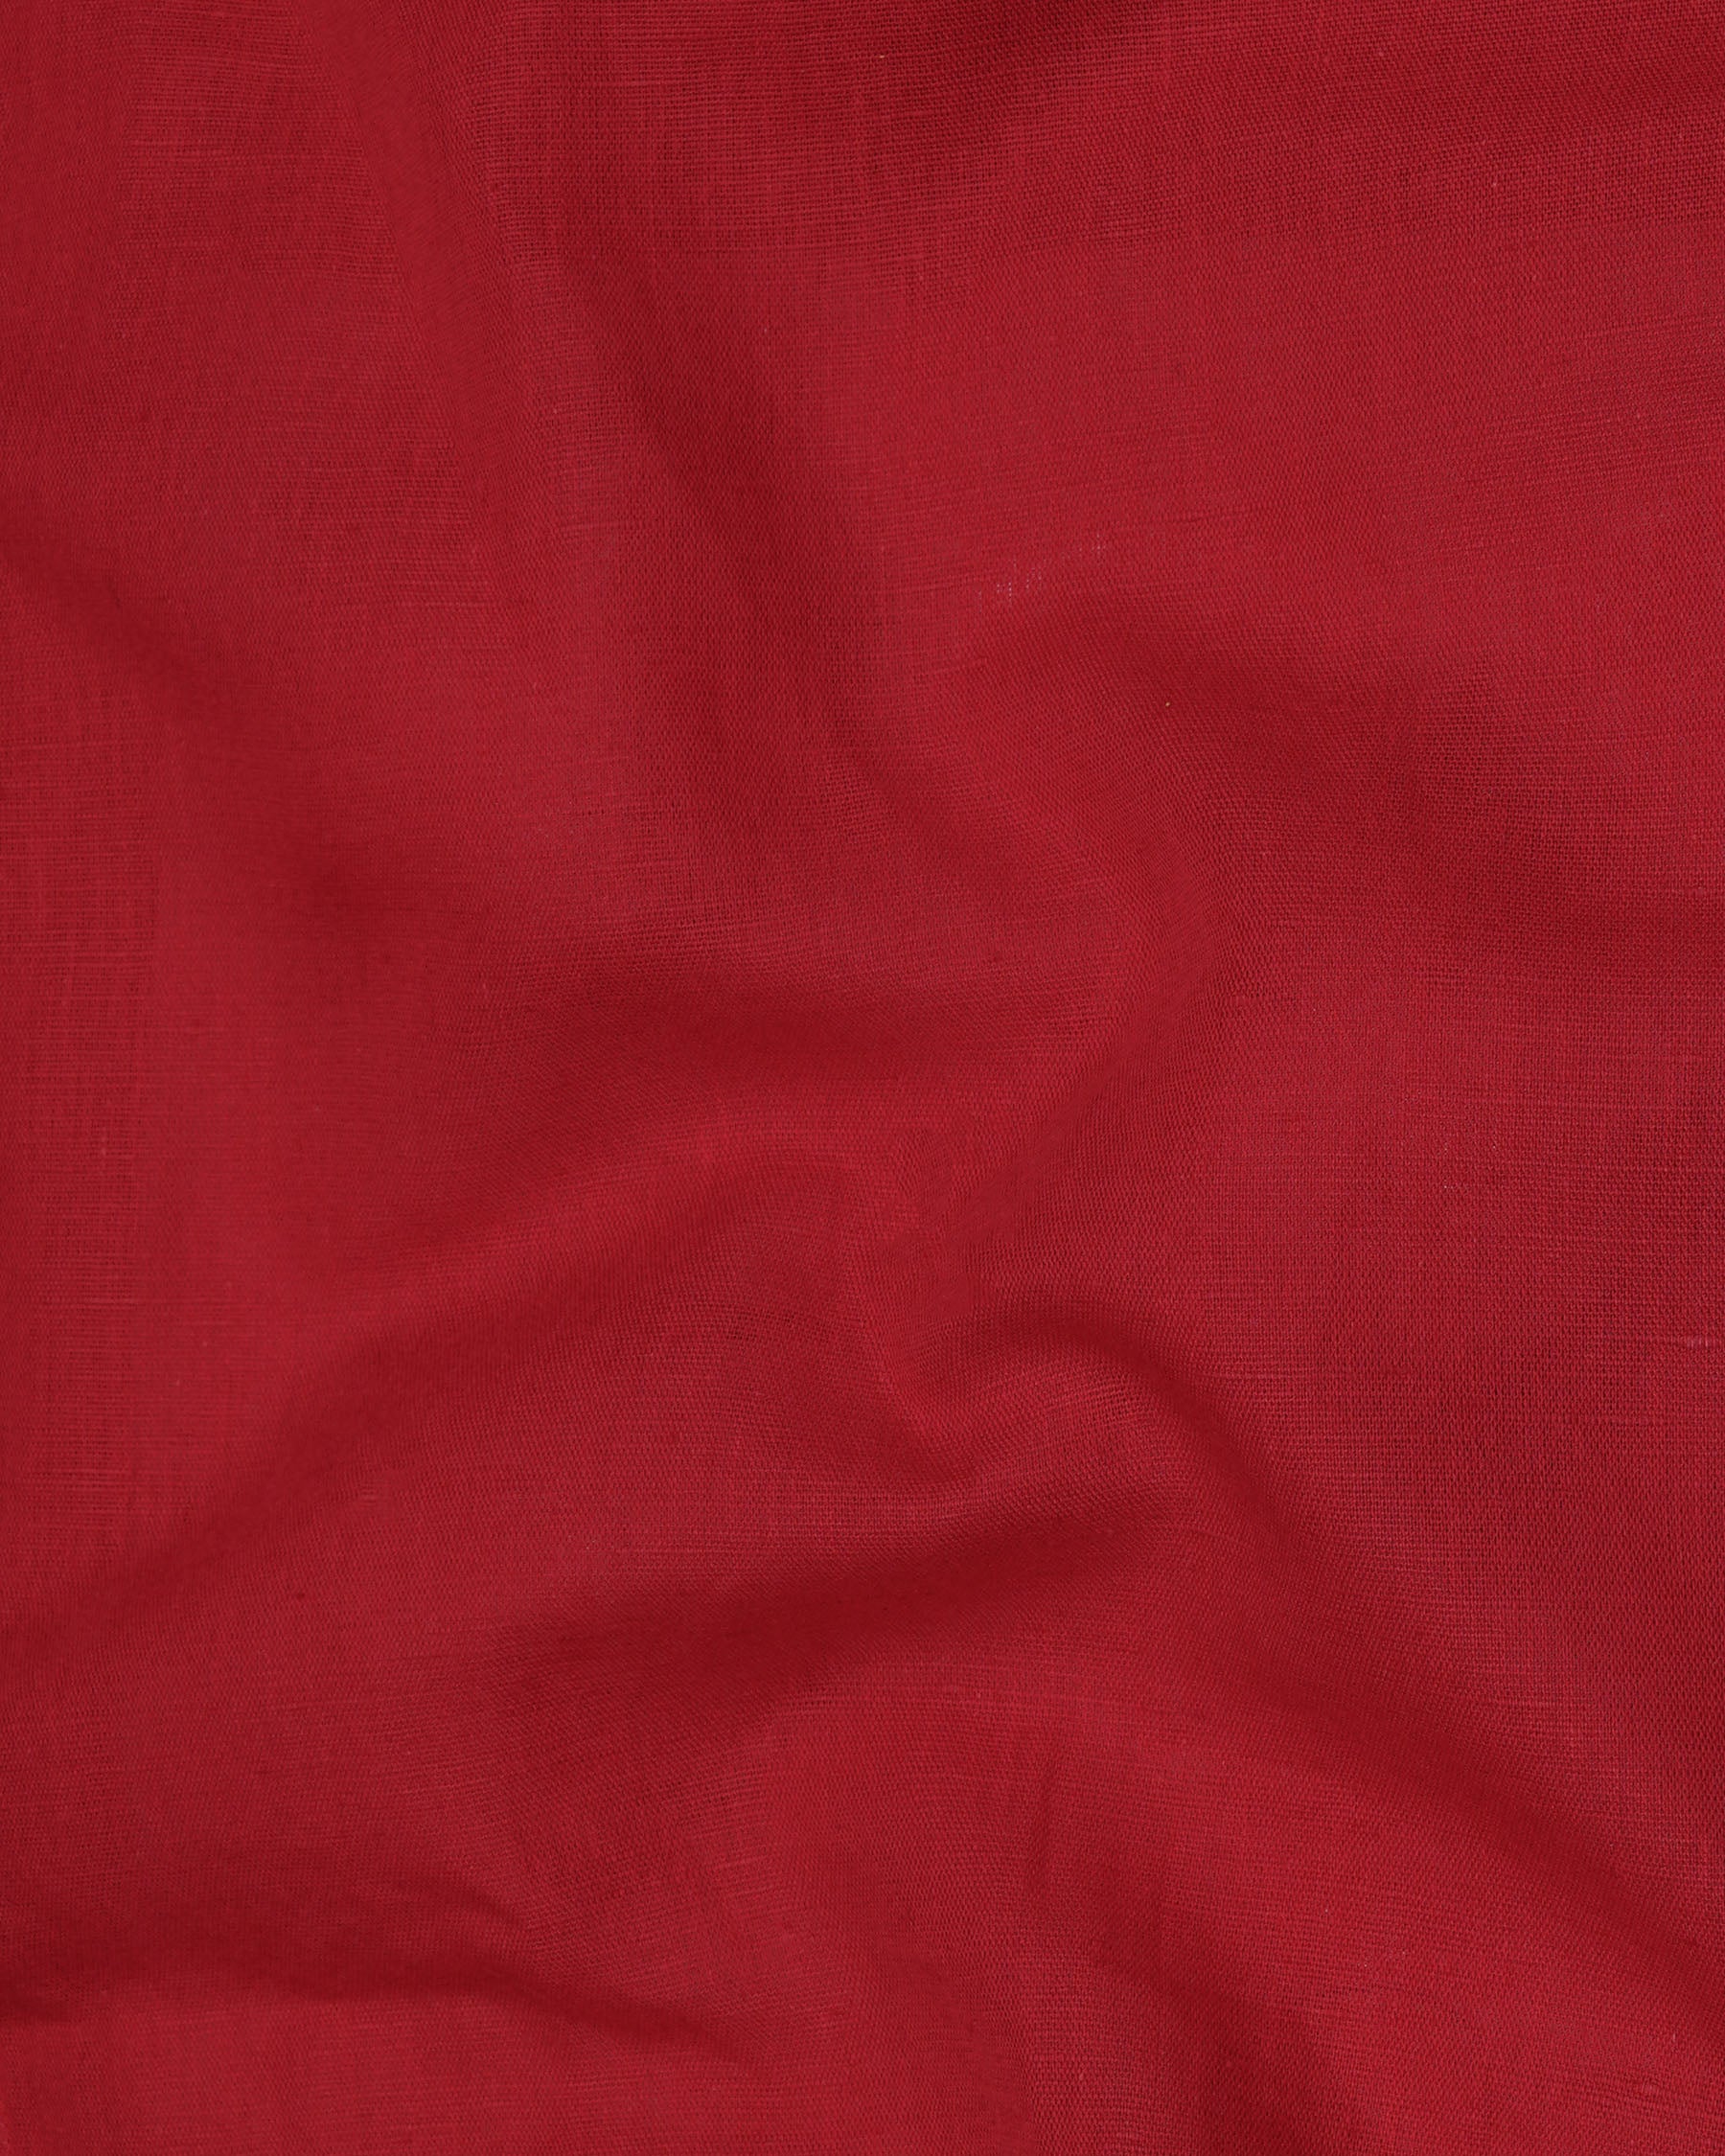 Vivid Auburn Red Luxurious Linen Shirt 7732-38, 7732-H-38, 7732-39,7732-H-39, 7732-40, 7732-H-40, 7732-42, 7732-H-42, 7732-44, 7732-H-44, 7732-46, 7732-H-46, 7732-48, 7732-H-48, 7732-50, 7732-H-50, 7732-52, 7732-H-52